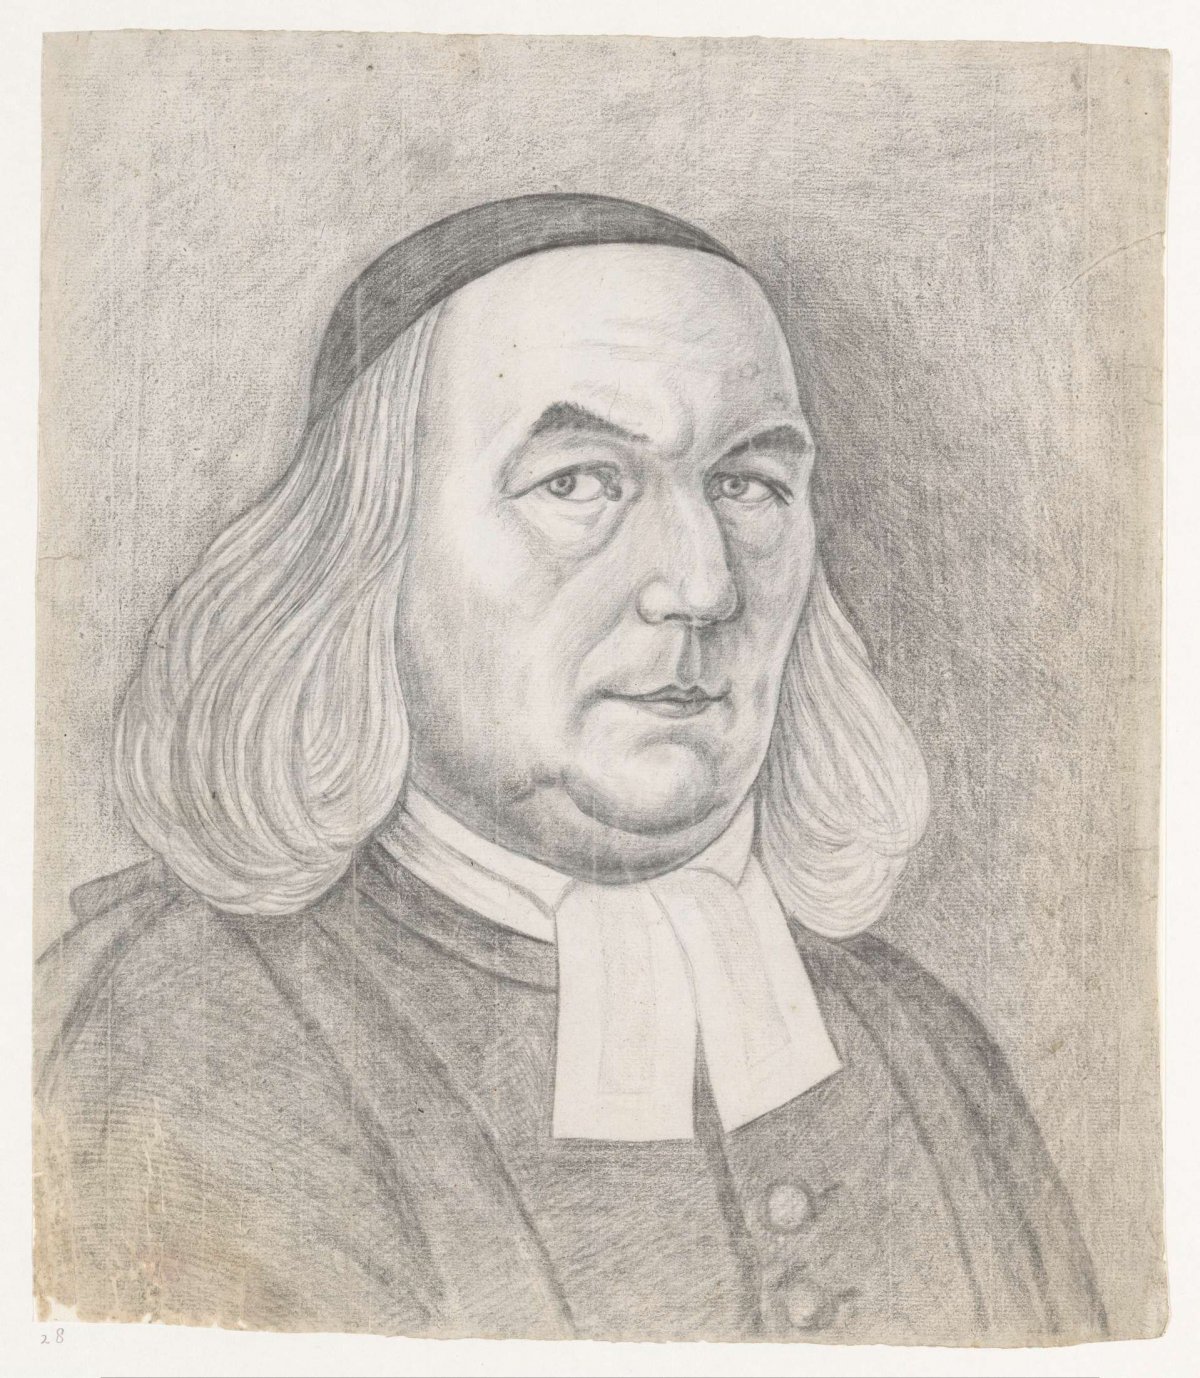 Self-portrait of Jan Brandes 1806, Jan Brandes, 1806